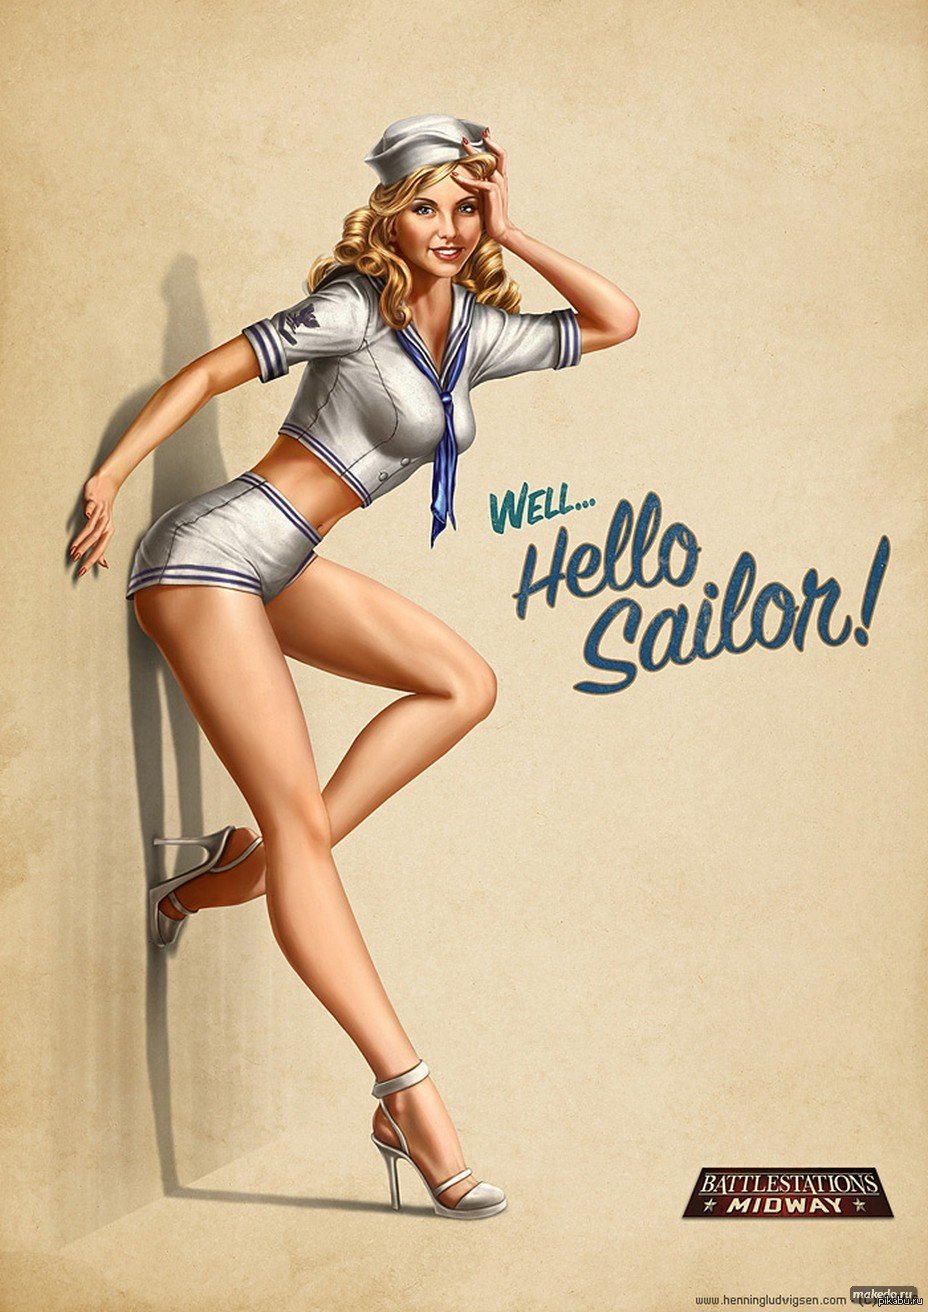 Пин ап бук контора. Пин ап девушки морячки. Рисунки в стиле пин ап. Американские плакаты с девушками. Девушки в стиле пин ап.